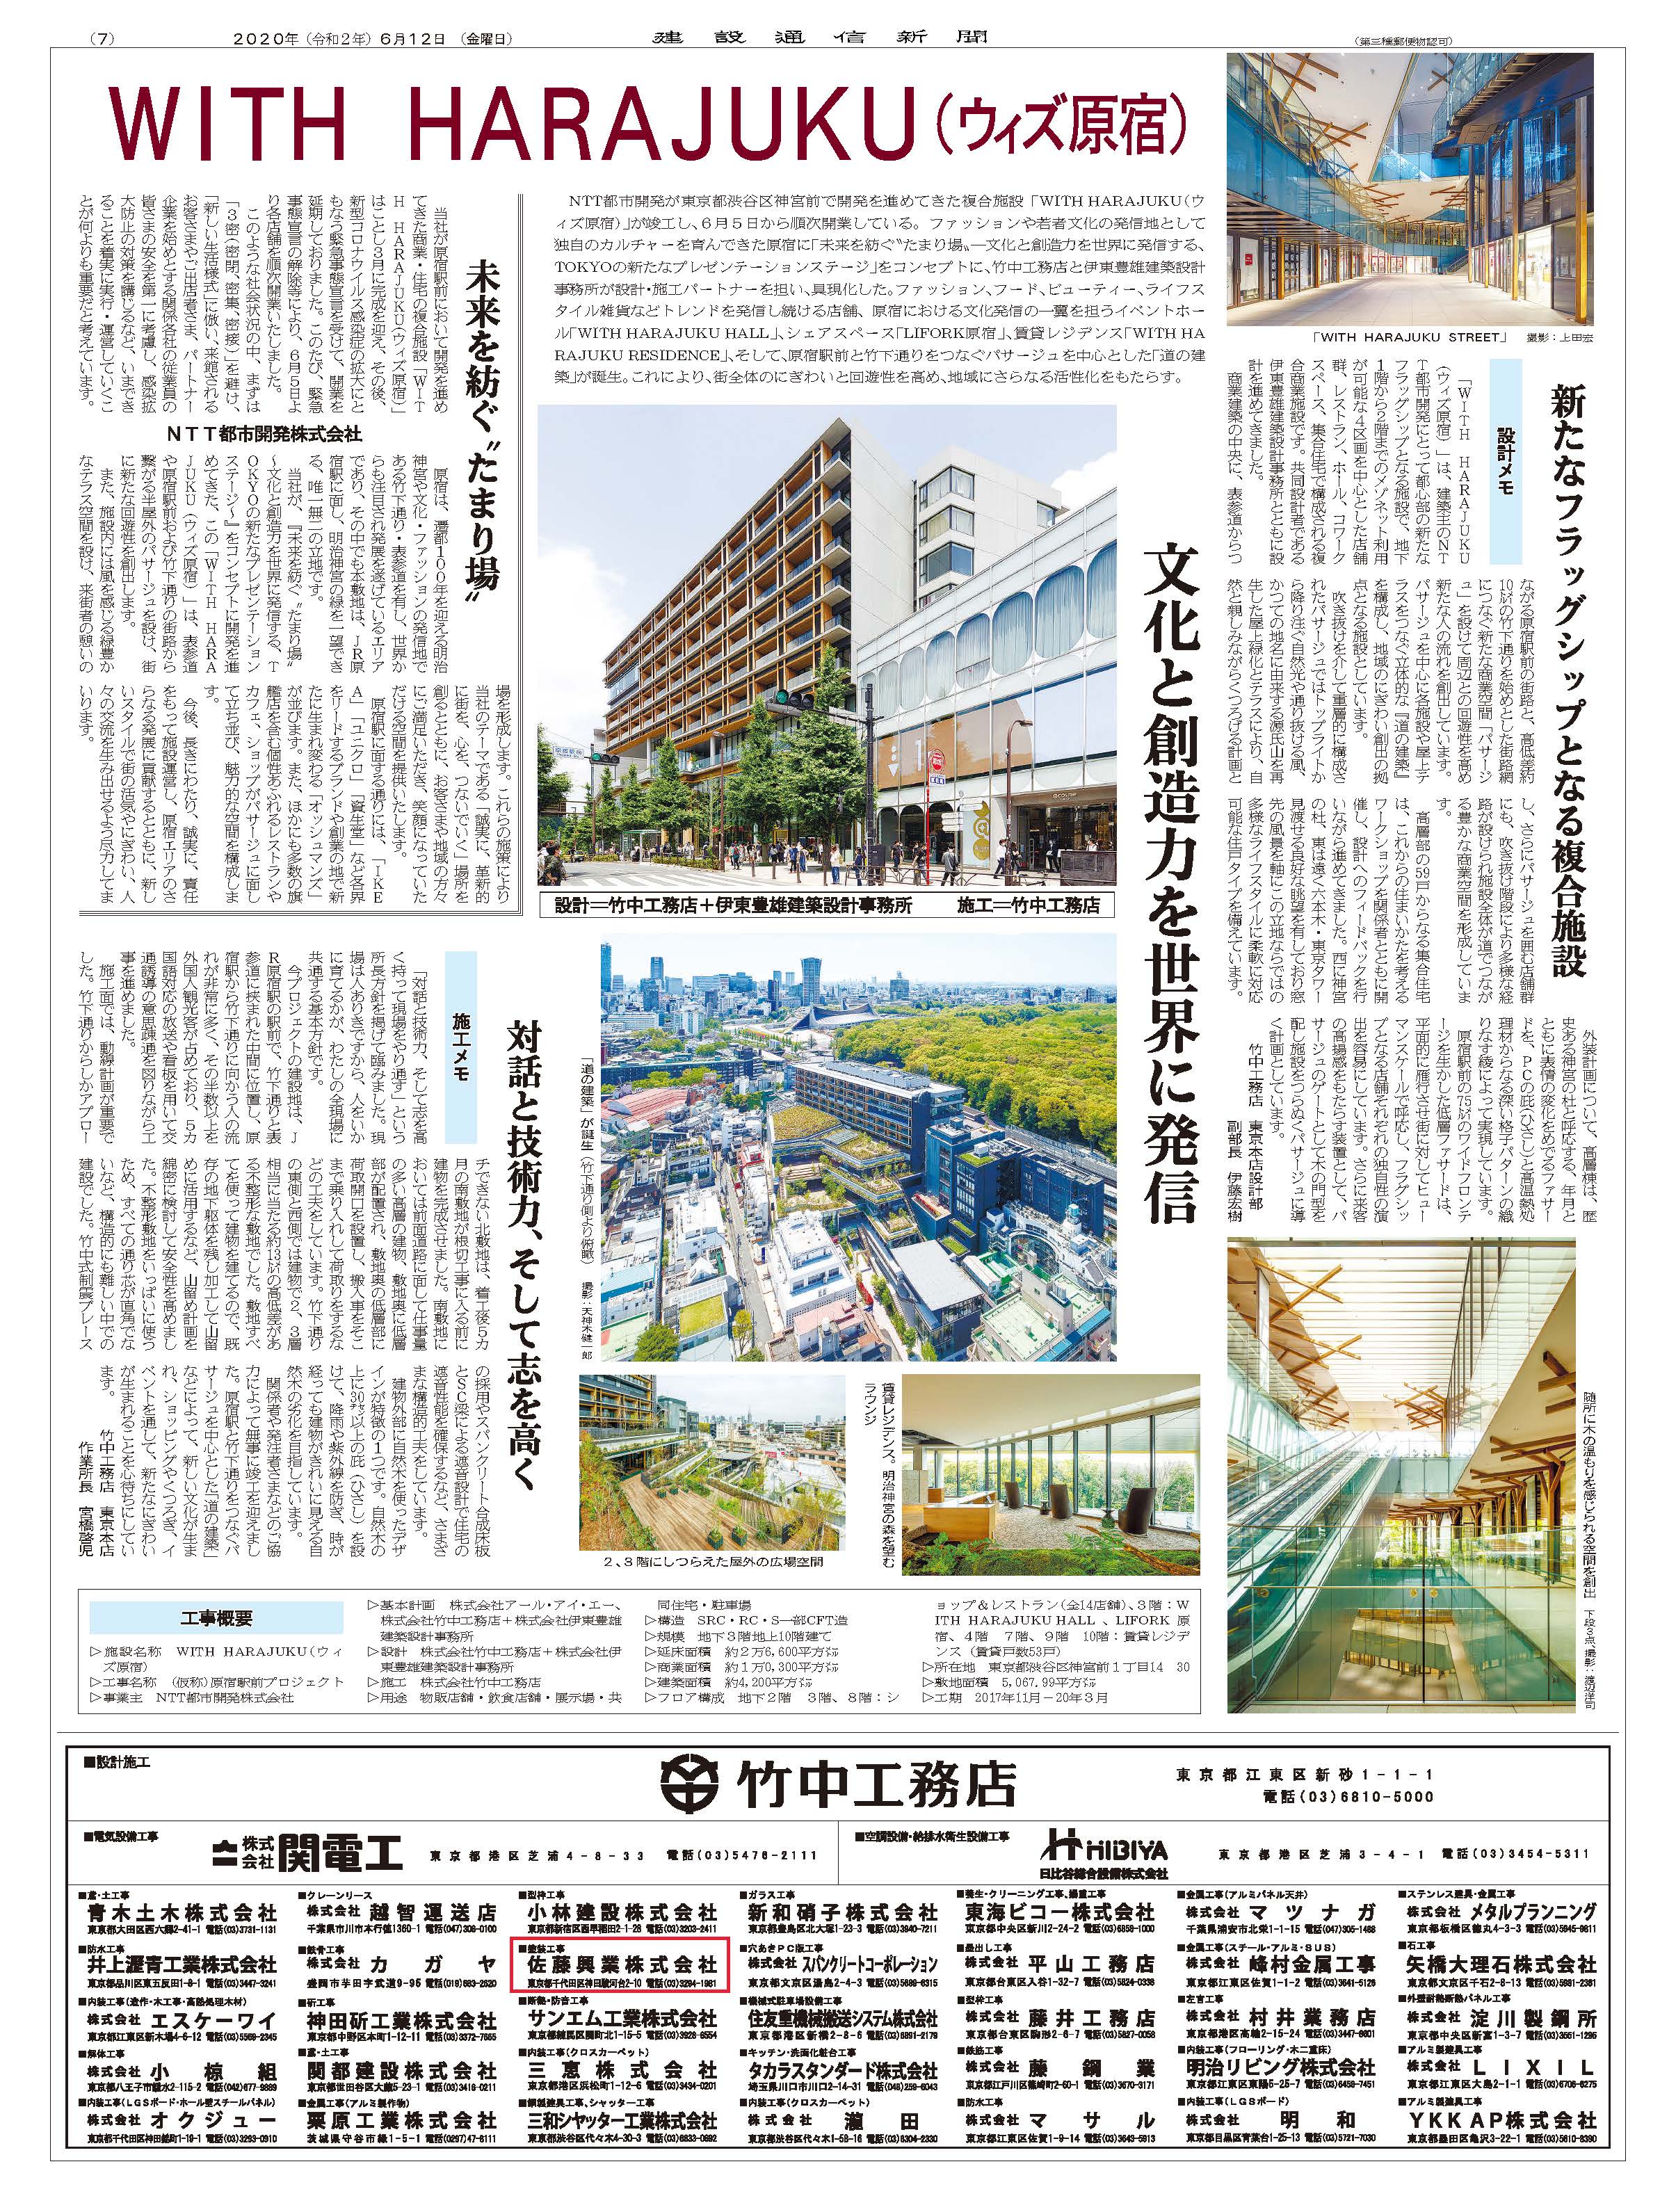 WITH HARAJUKU（ウィズ原宿）の竣工広告が『建設通信新聞』に掲載